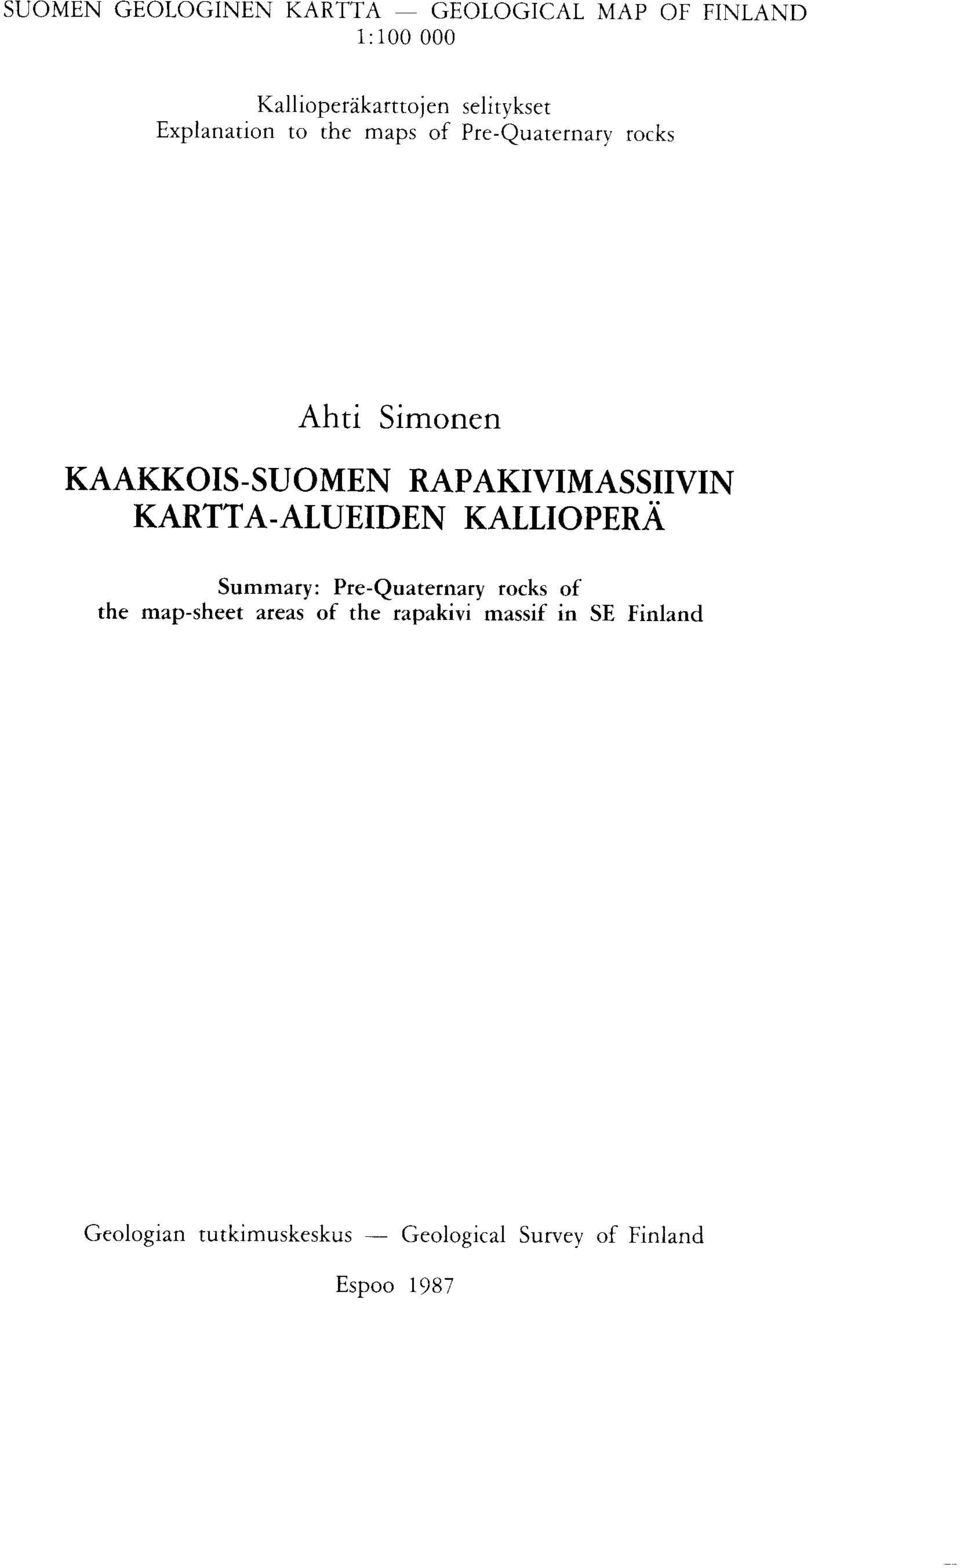 RAPAKIVIMASSIIVIN KARTTA-ALUEIDEN KALLIOPERA Summary : Pre-Quaternary rocks of the map-sheet